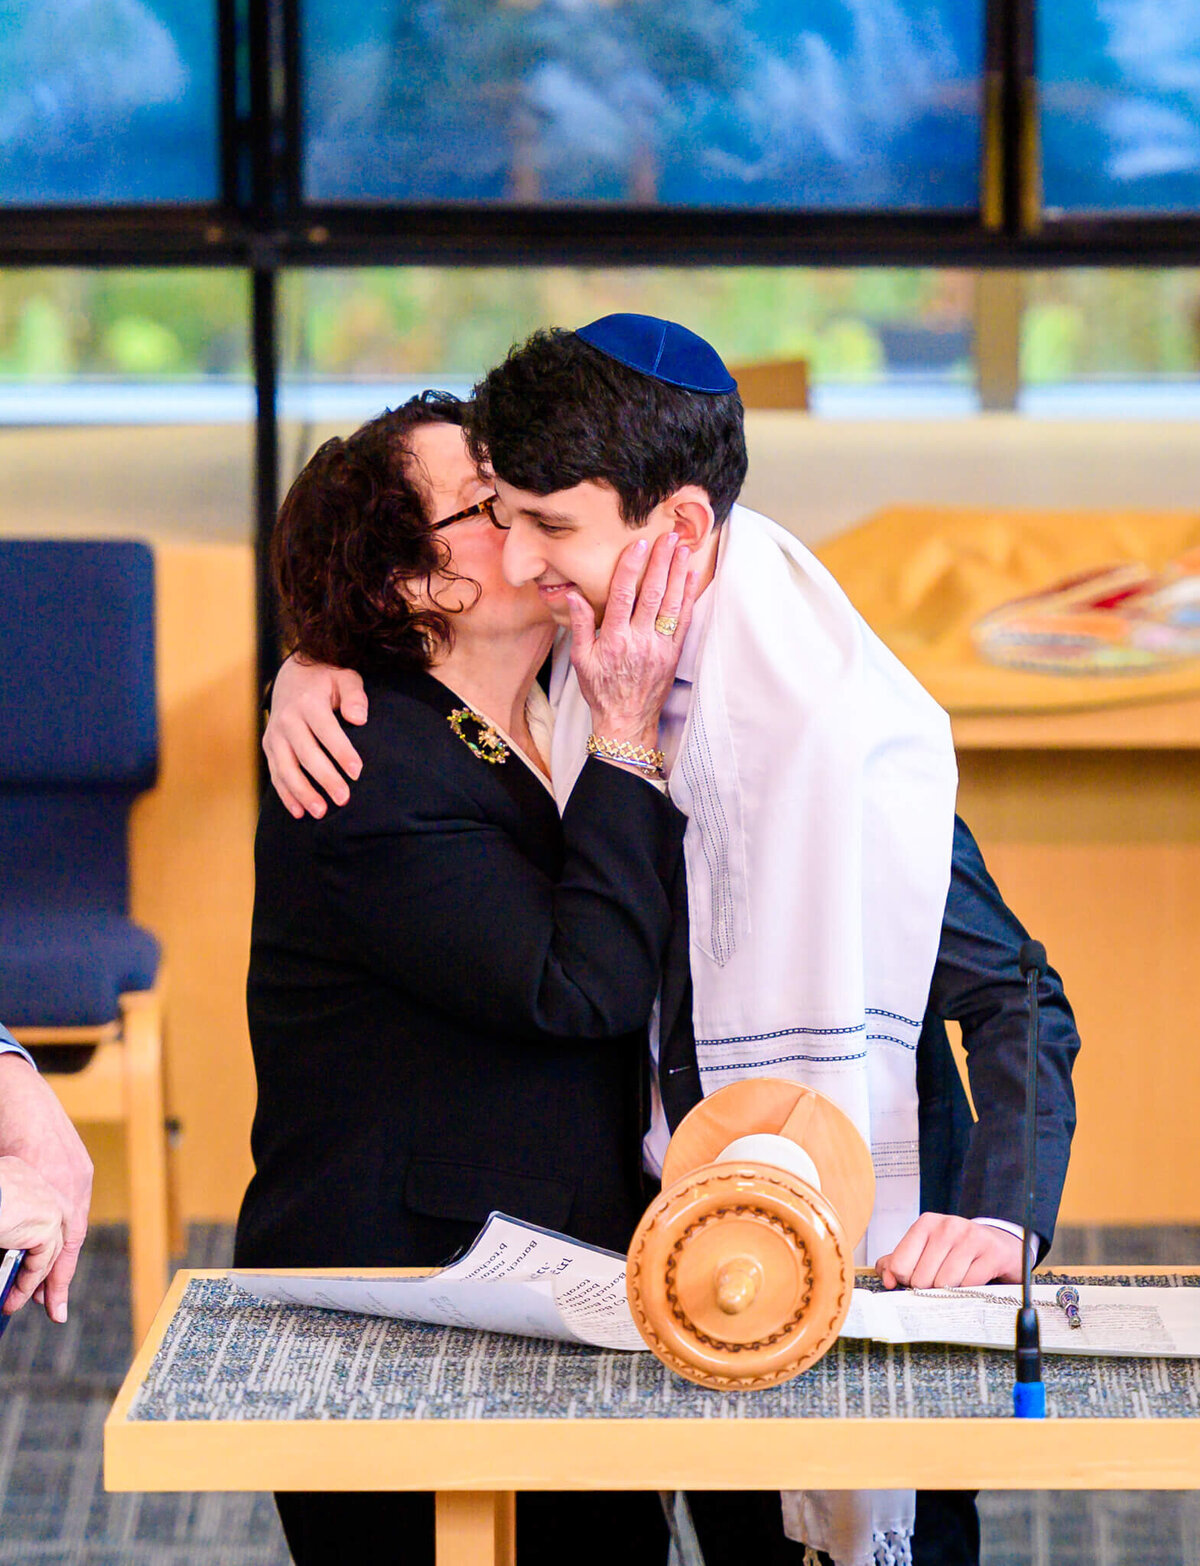 A woman kisses the cheek of a boy during his bar mitzvah at the bimah